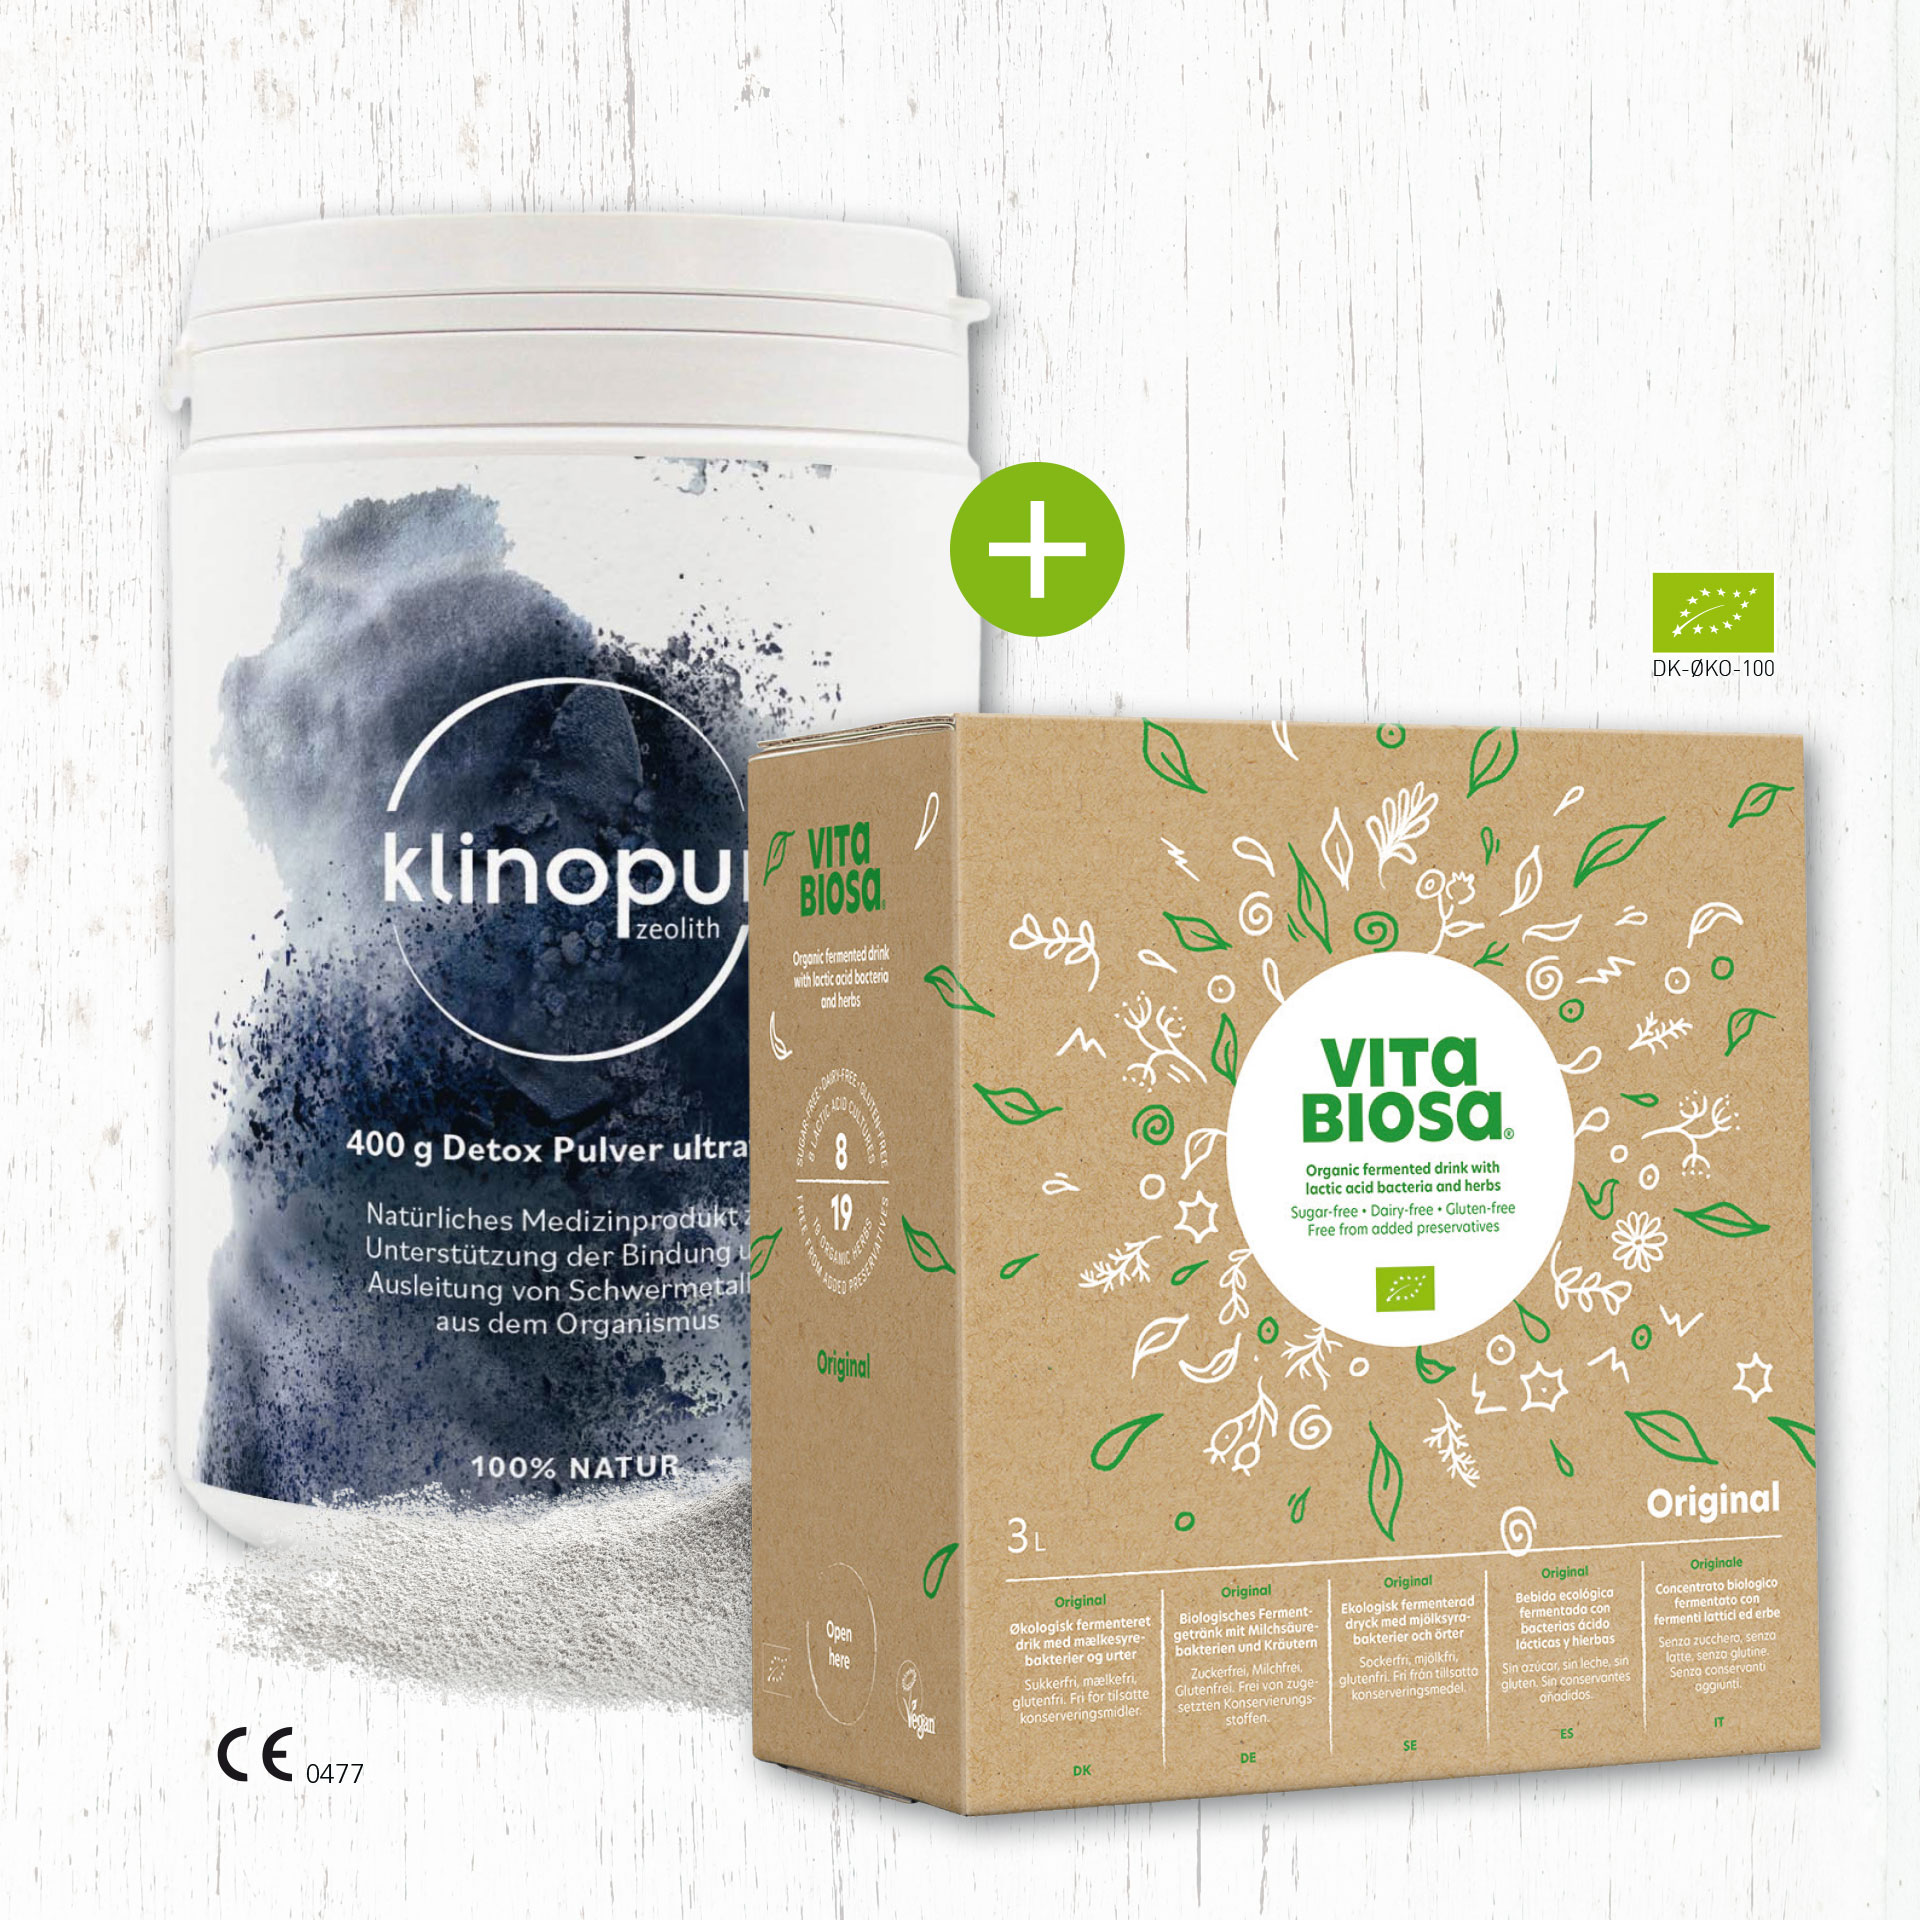 Kombi Angebot Vita Biosa Original 3 L   Klinopur 450g Zeolith kaufen